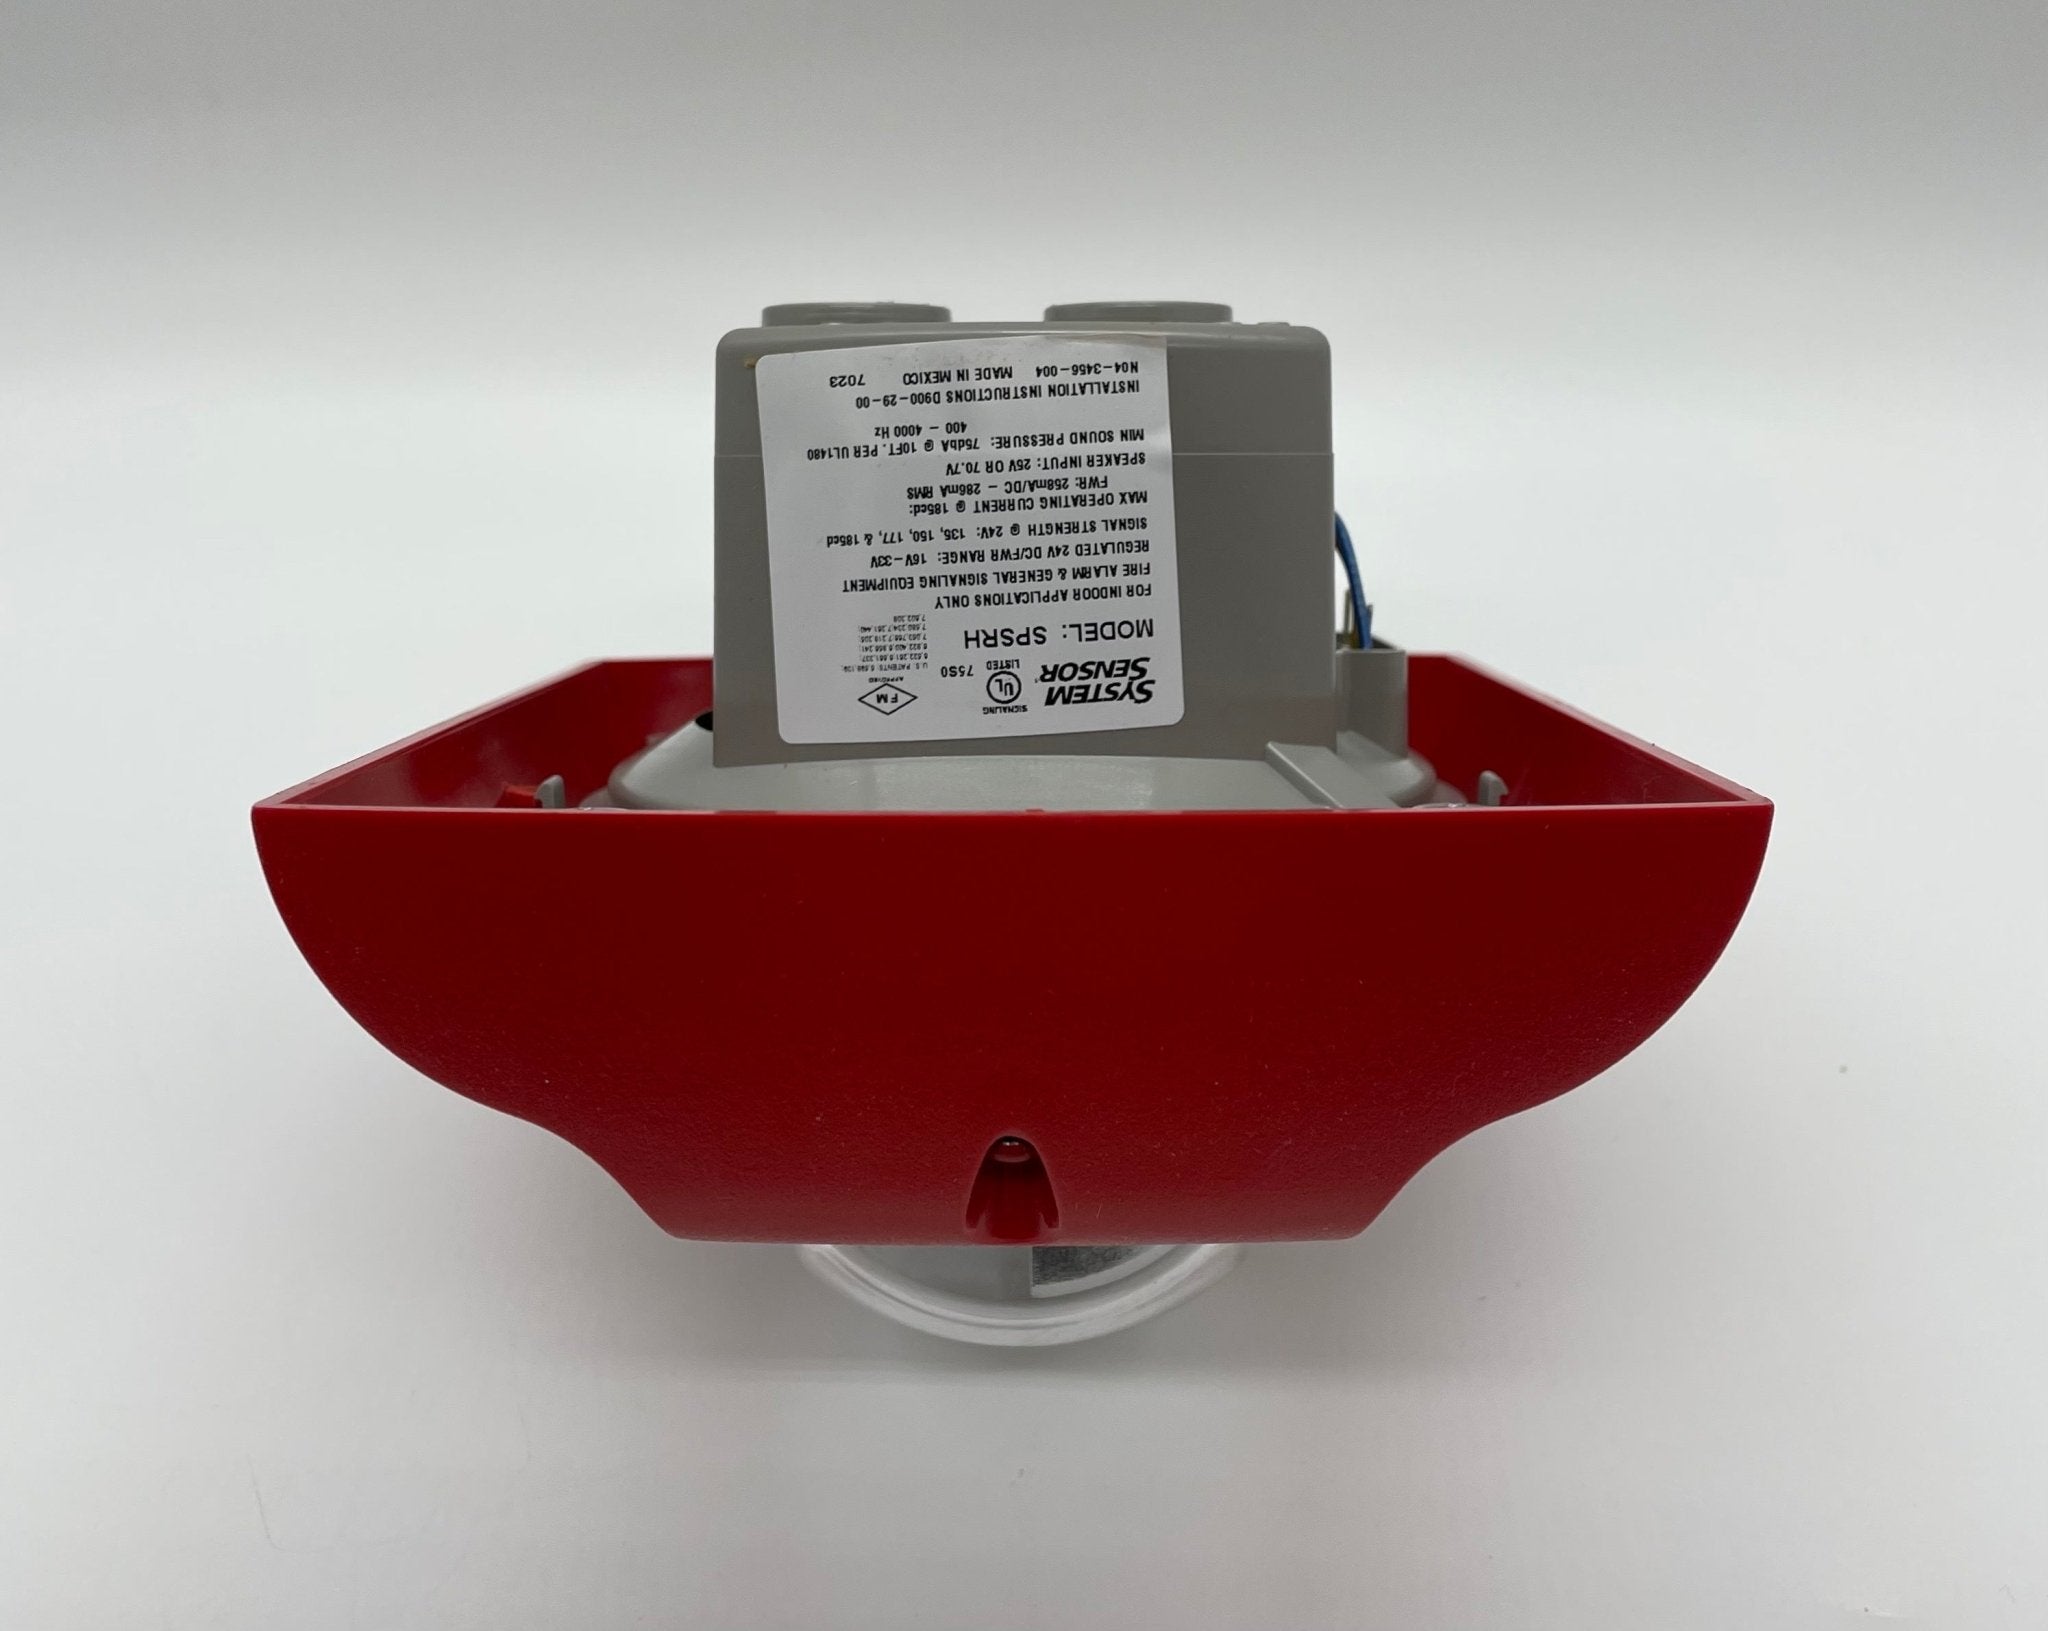 System Sensor SPSRH - The Fire Alarm Supplier